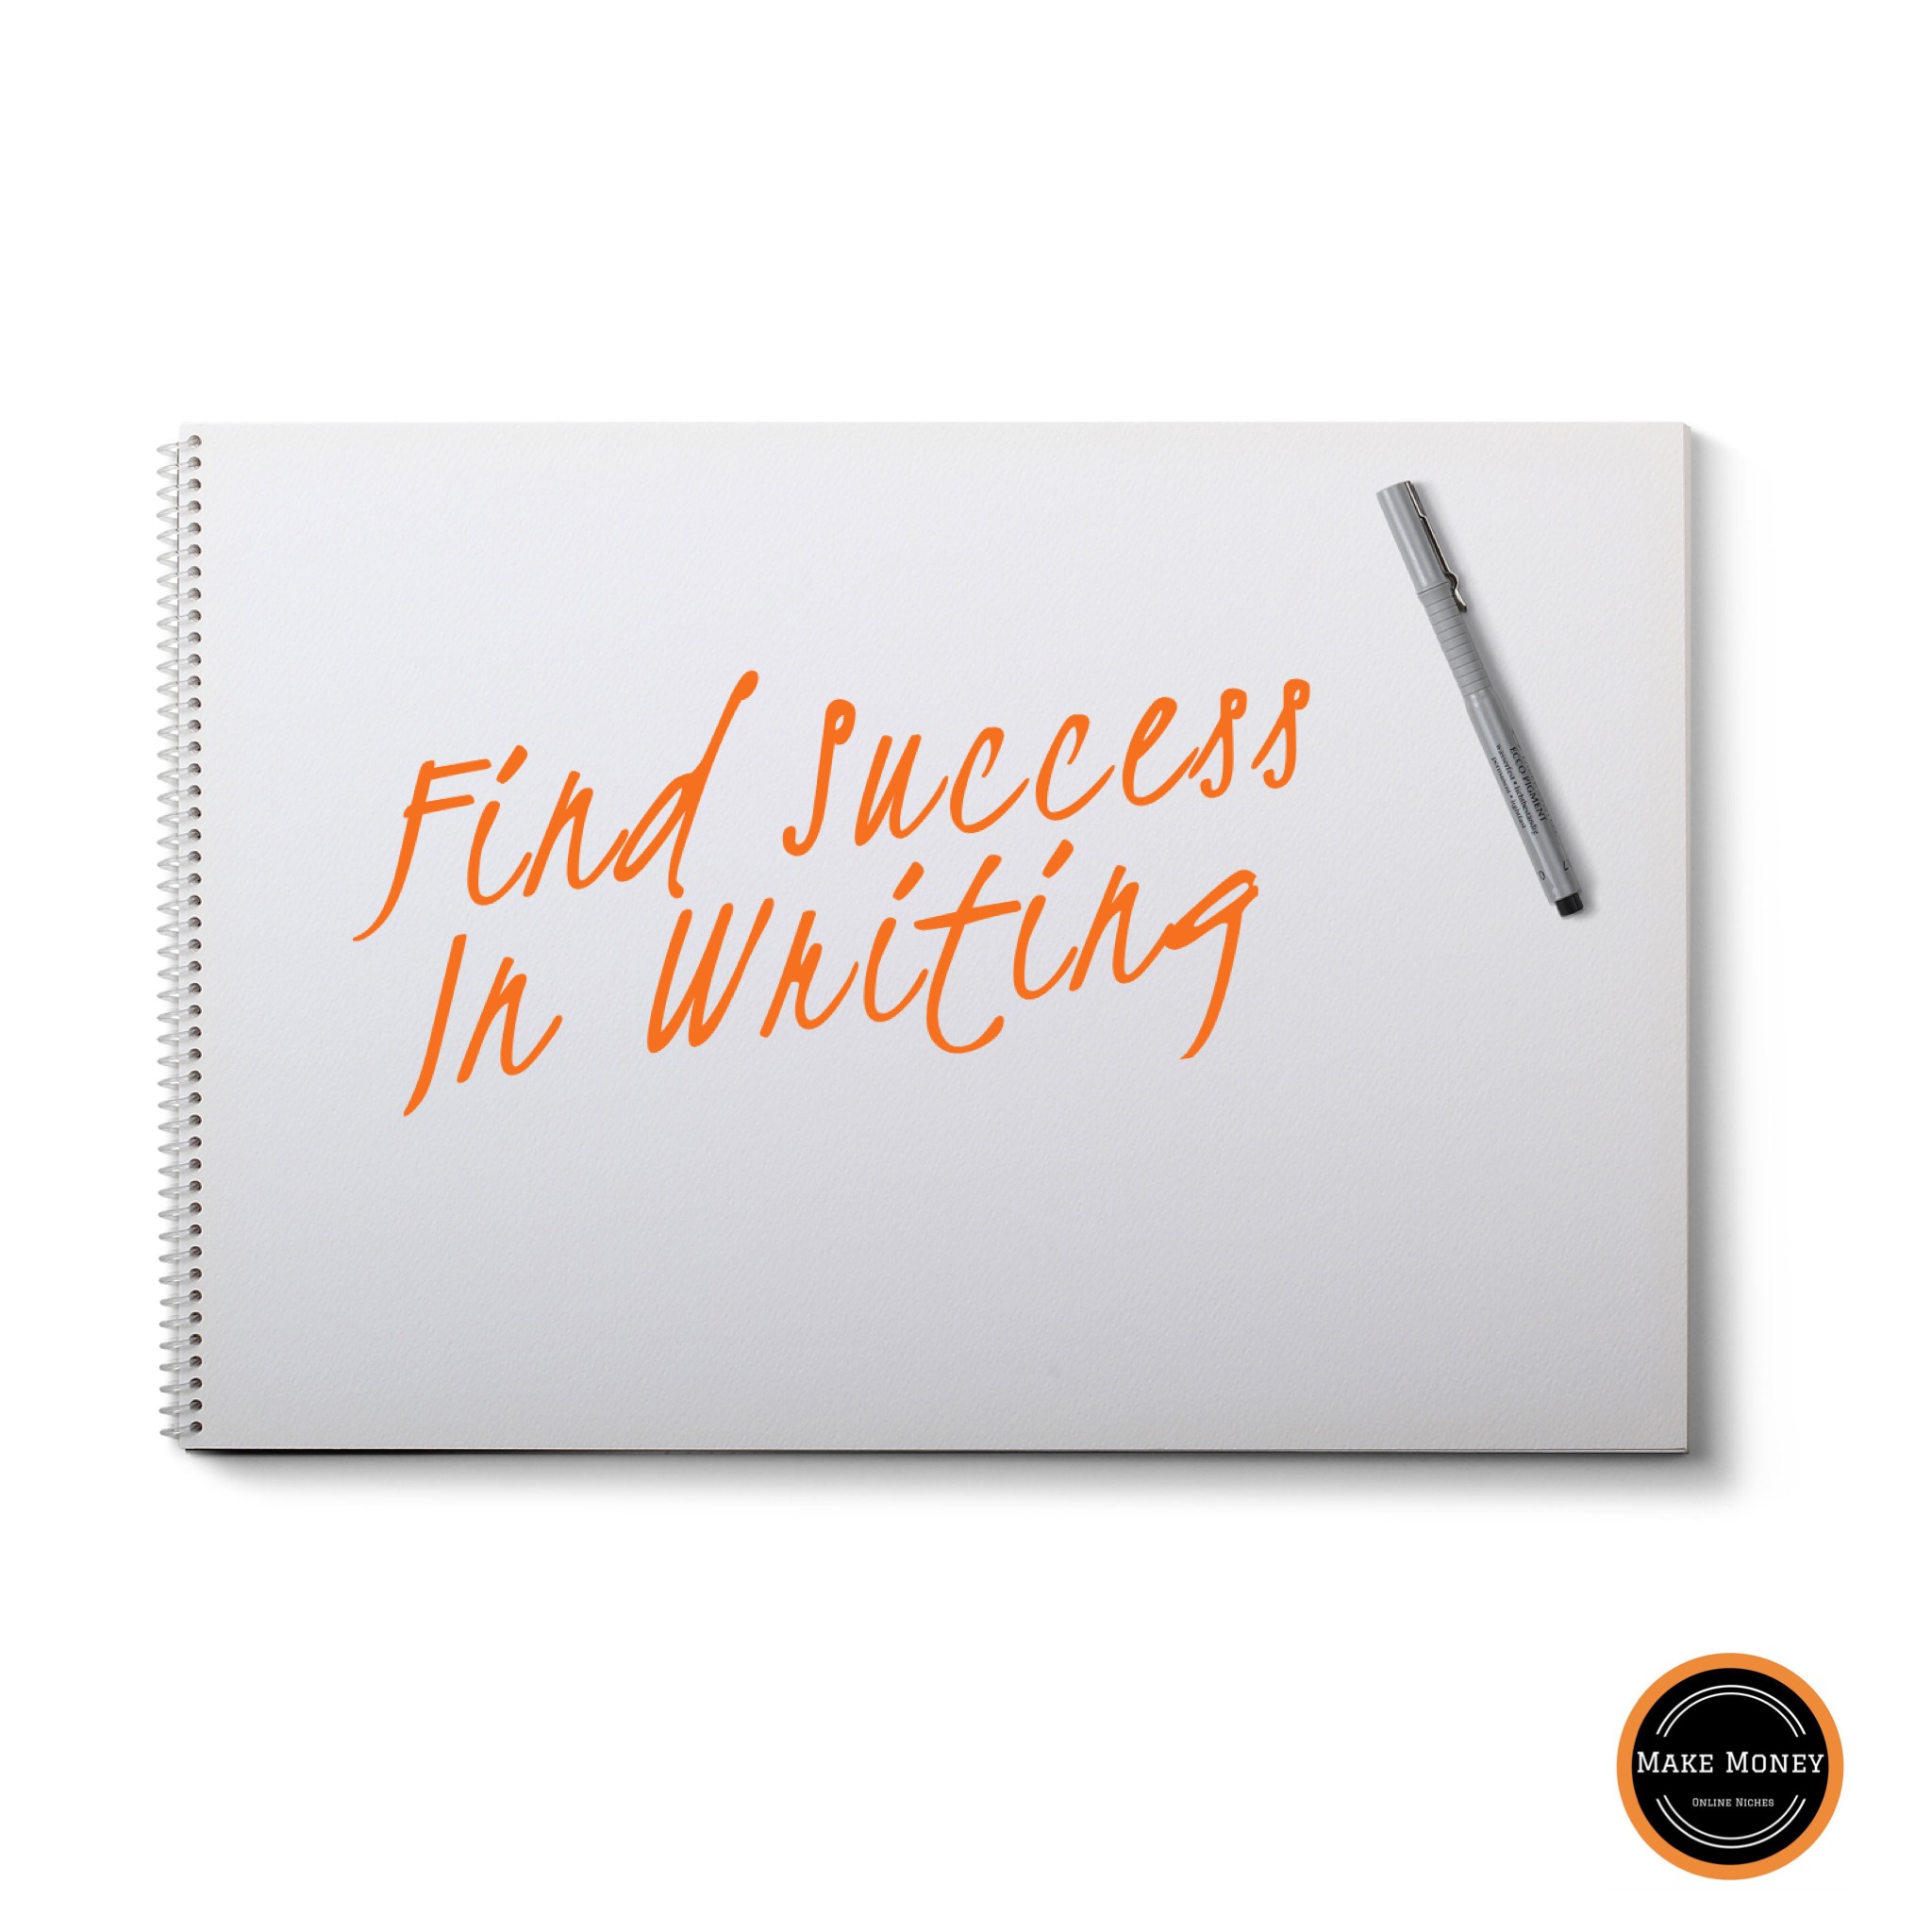 Find success in writing